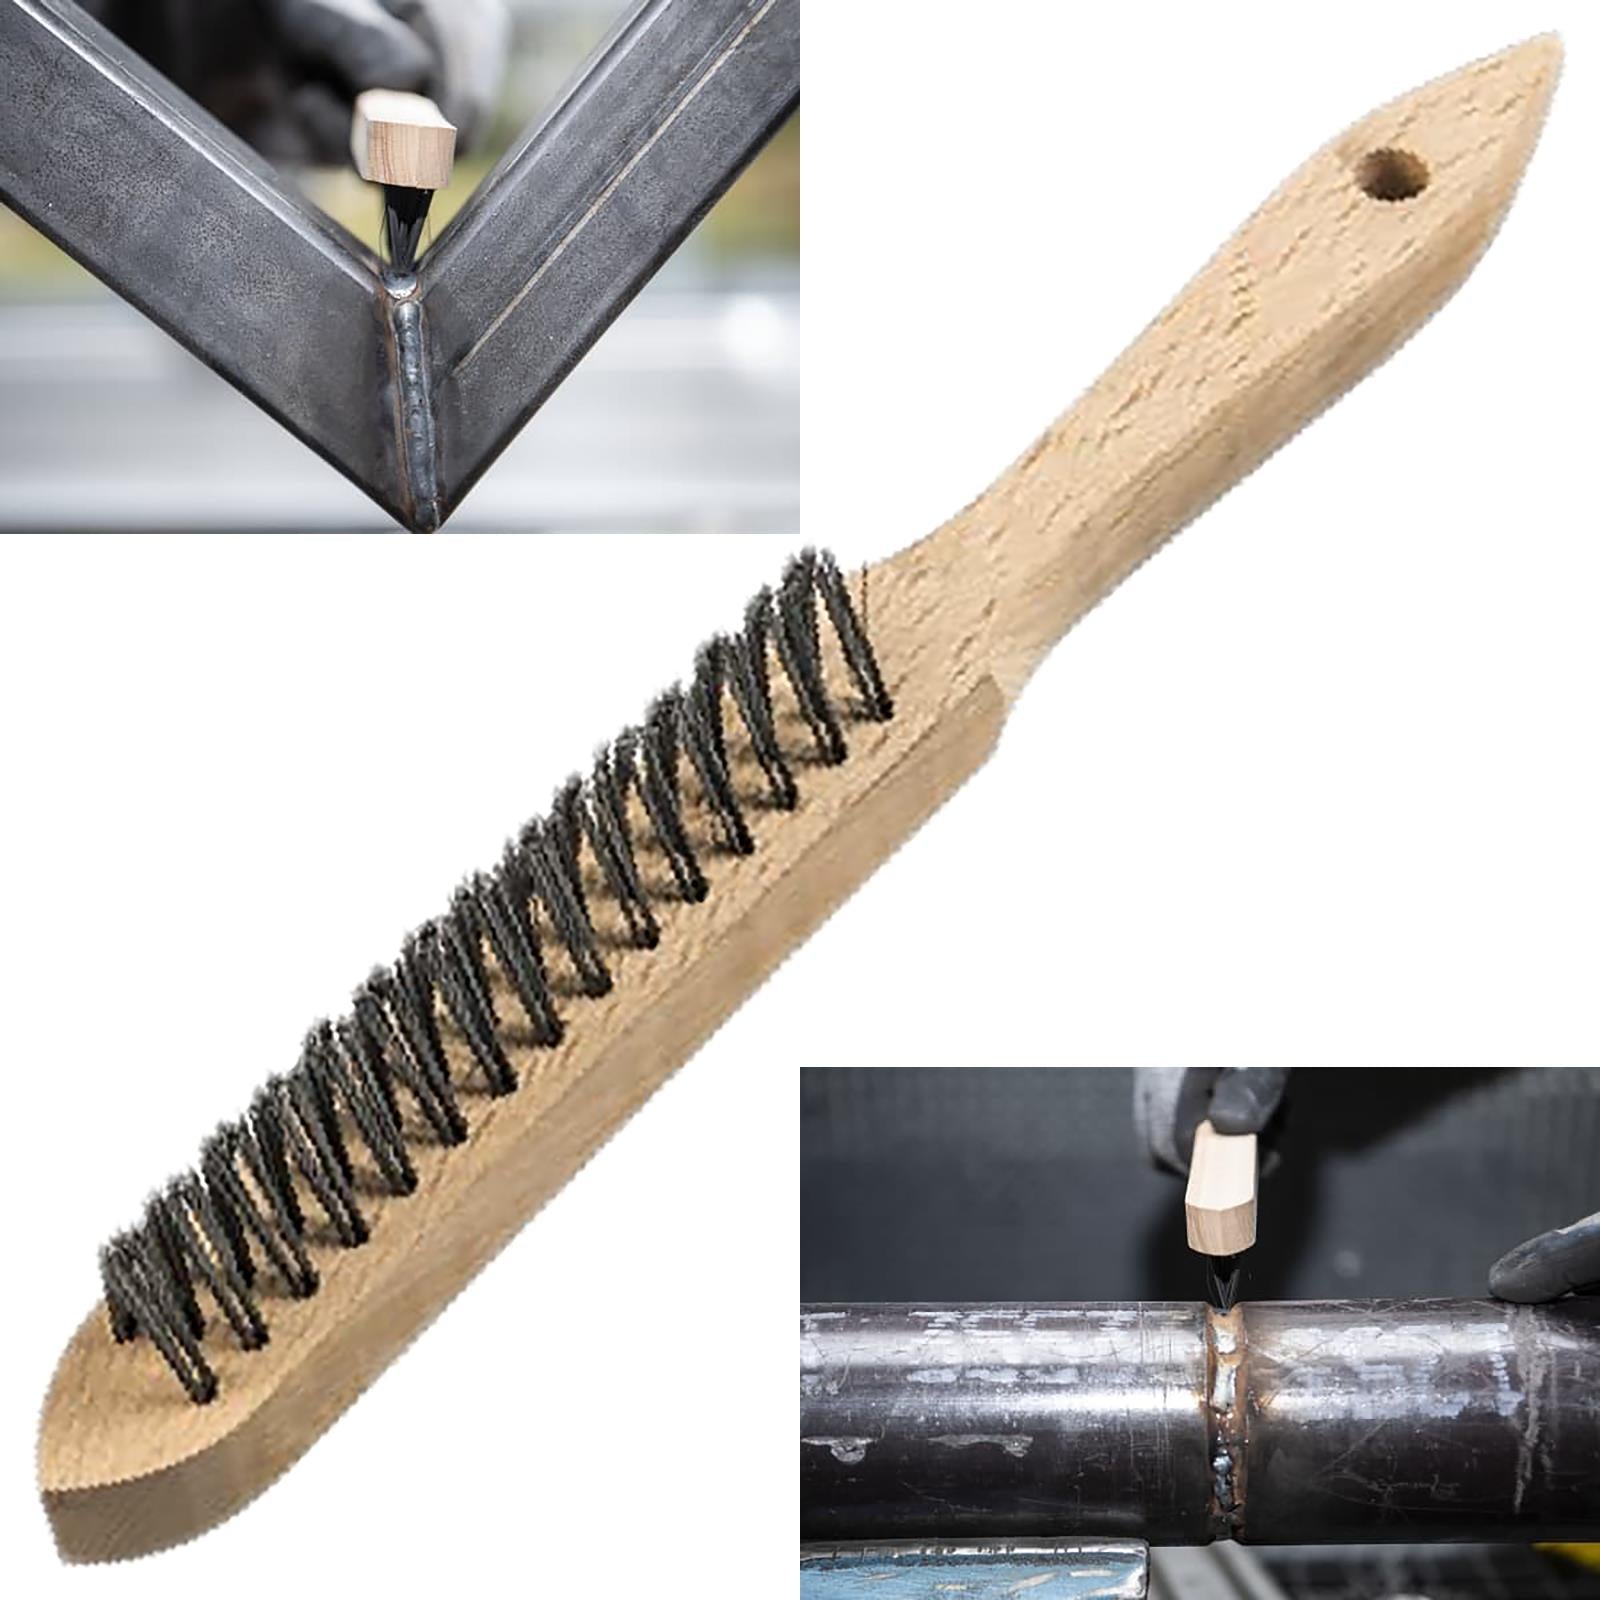 Klingspor Fillet Weld Hand Wire Brush Steel or Stainless Steel 290mm Wooden Handle BHK600